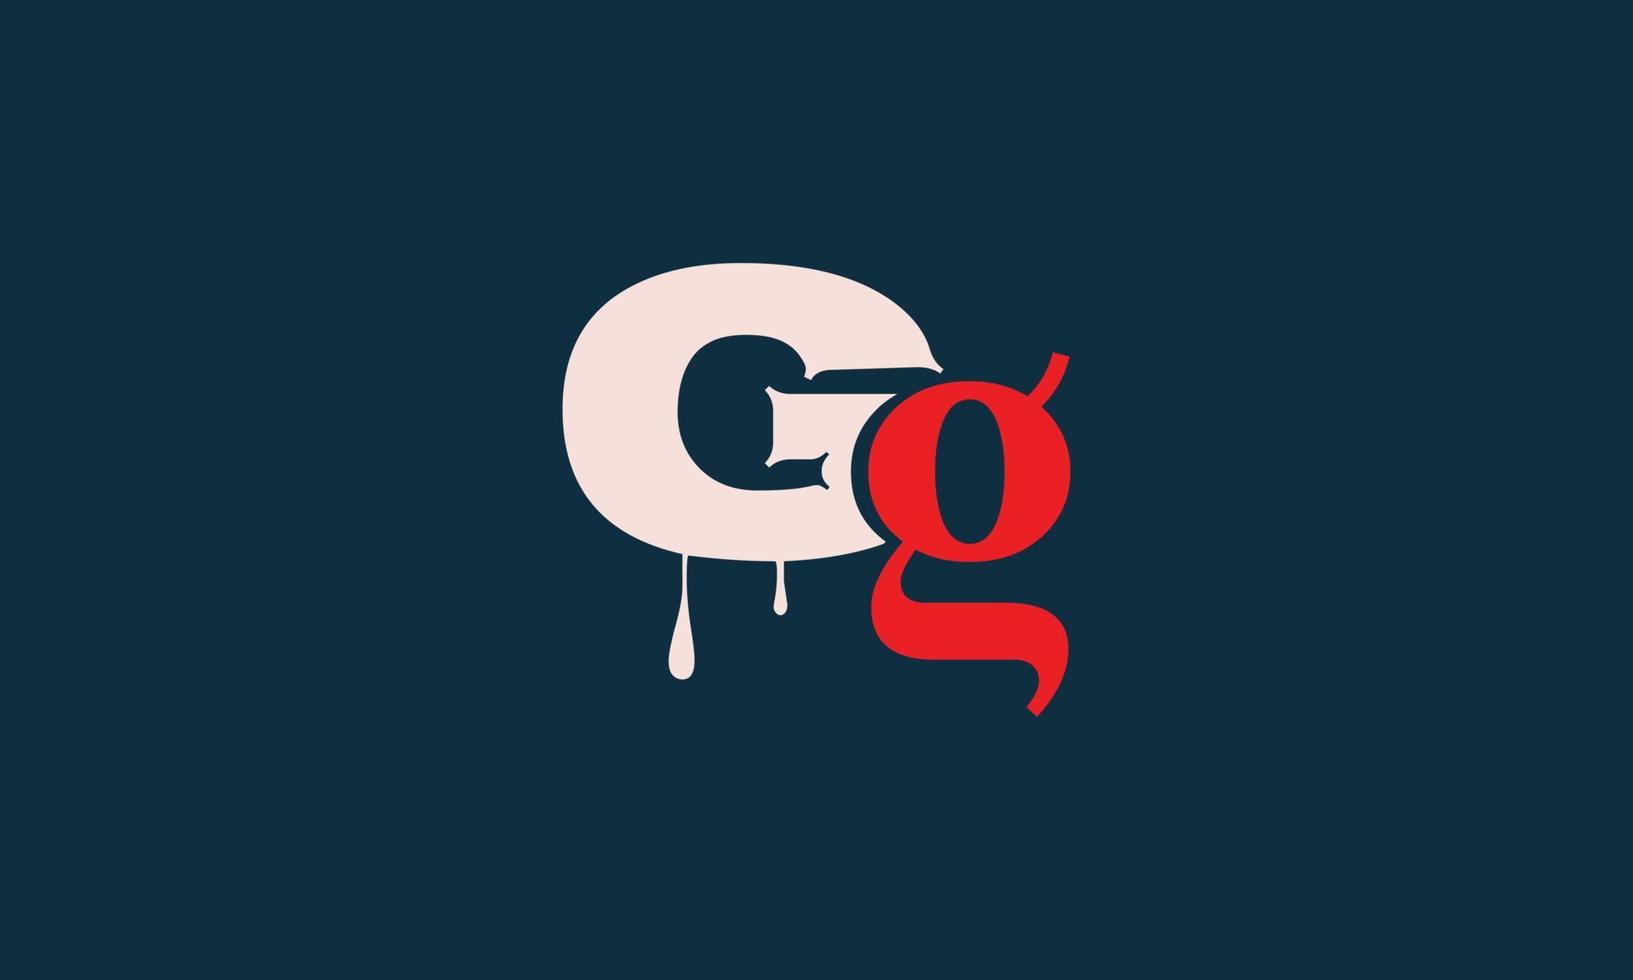 Alphabet letters Initials Monogram logo GG, G and G vector